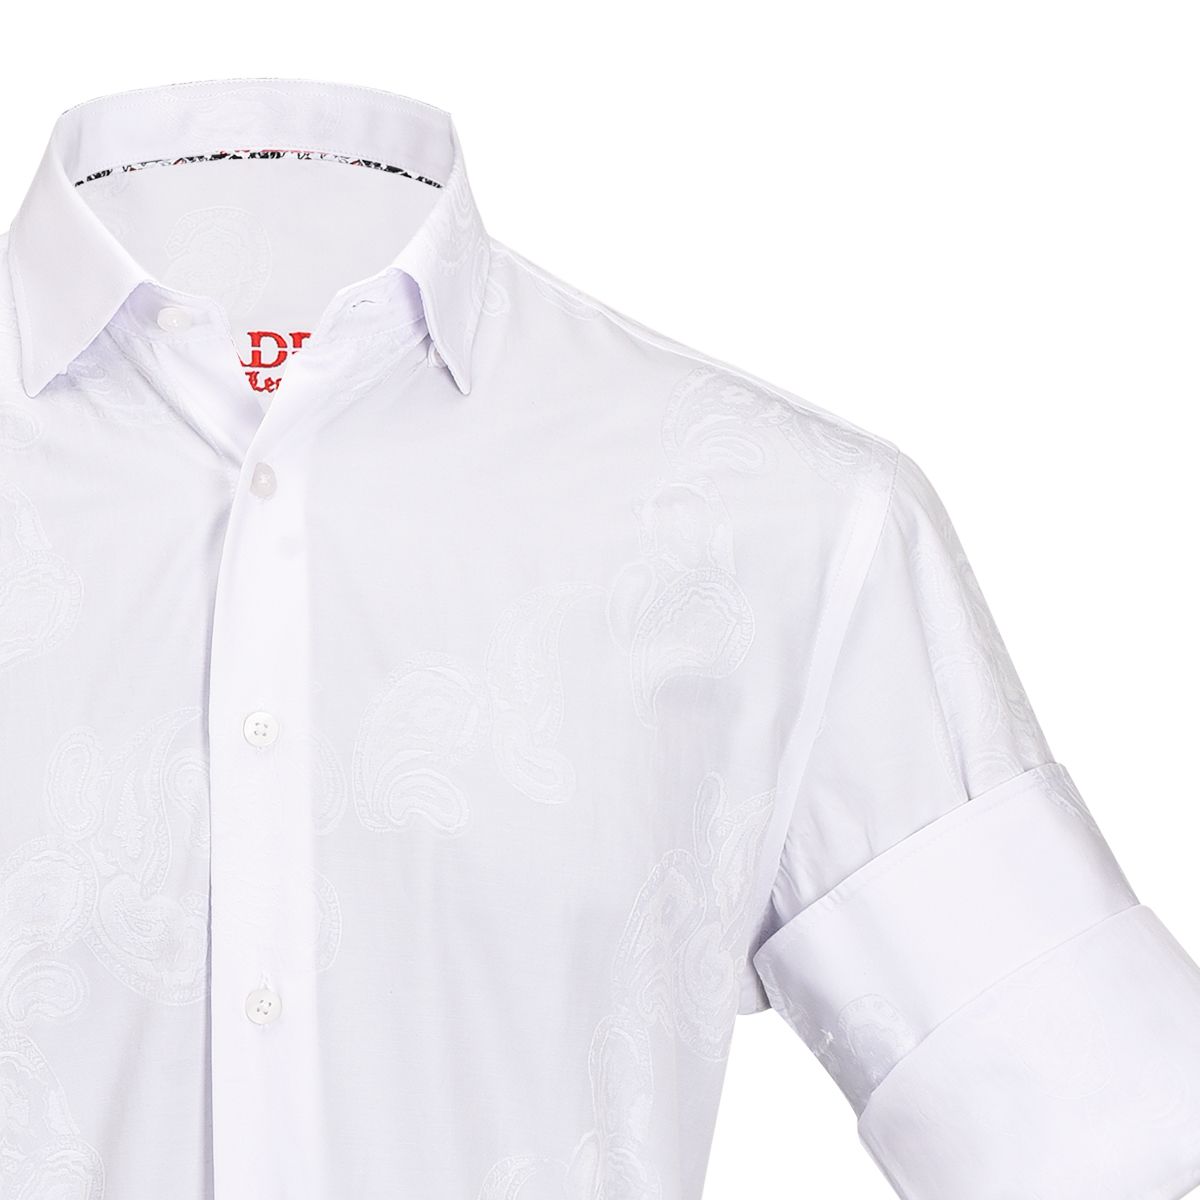 CM04625 - Cuadra white casual dress long sleeve cotton shirt for men-Kuet.us